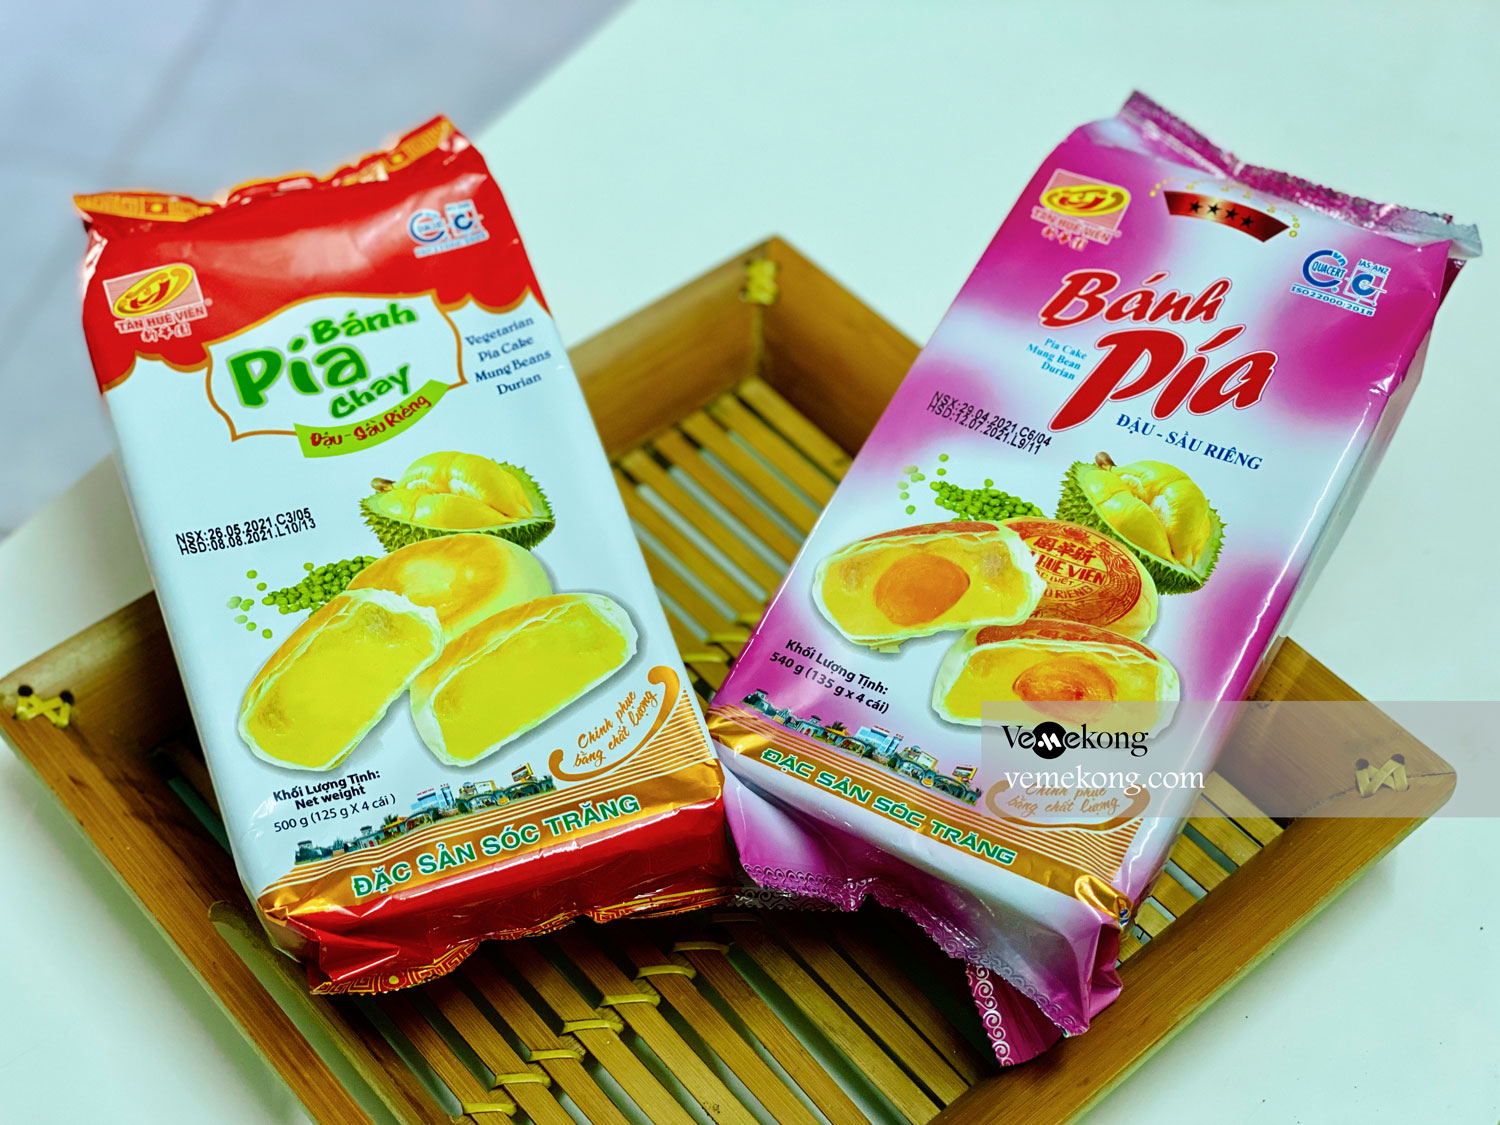 Pia Cake - Soc Trang's Best Thing to Buy